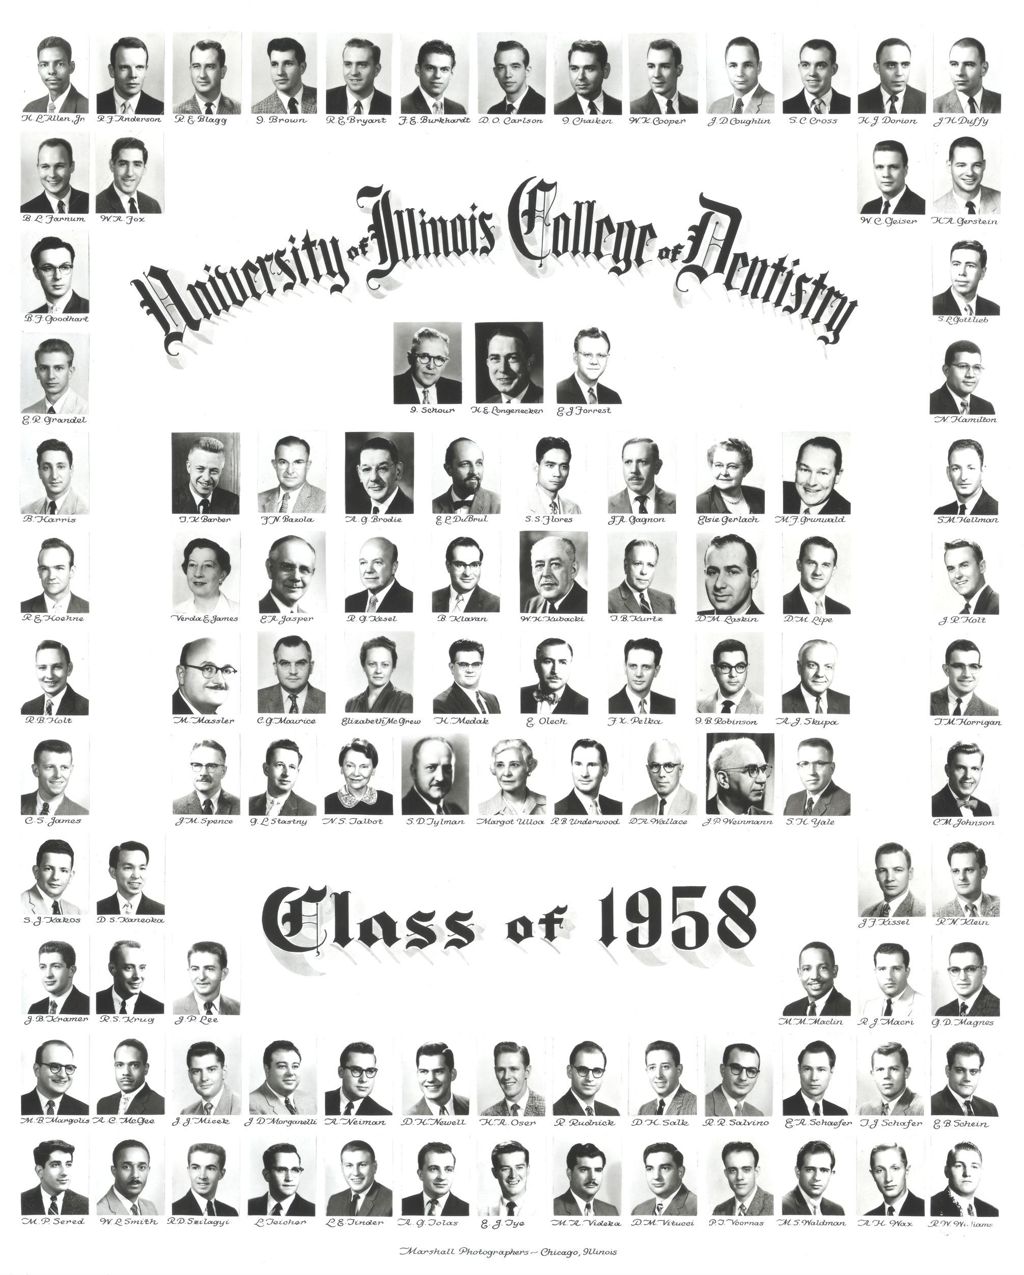 Miniature of 1958 graduating class, University of Illinois College of Dentistry